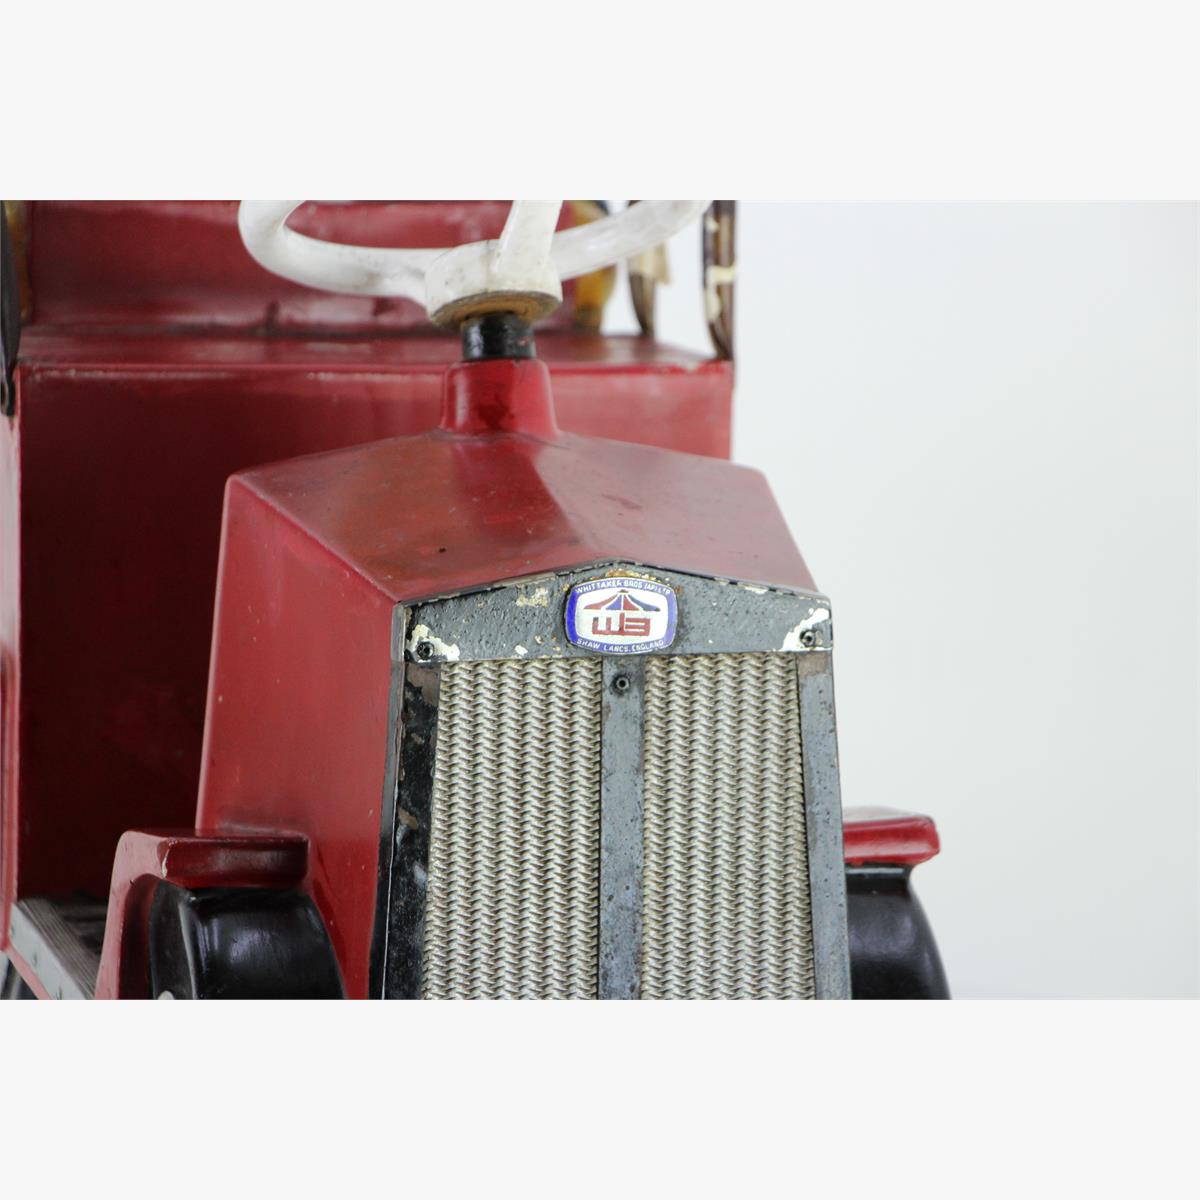 Afbeeldingen van vintage kermiswagentje brandweer bever whittaker bros shaw lancs england kiddyride